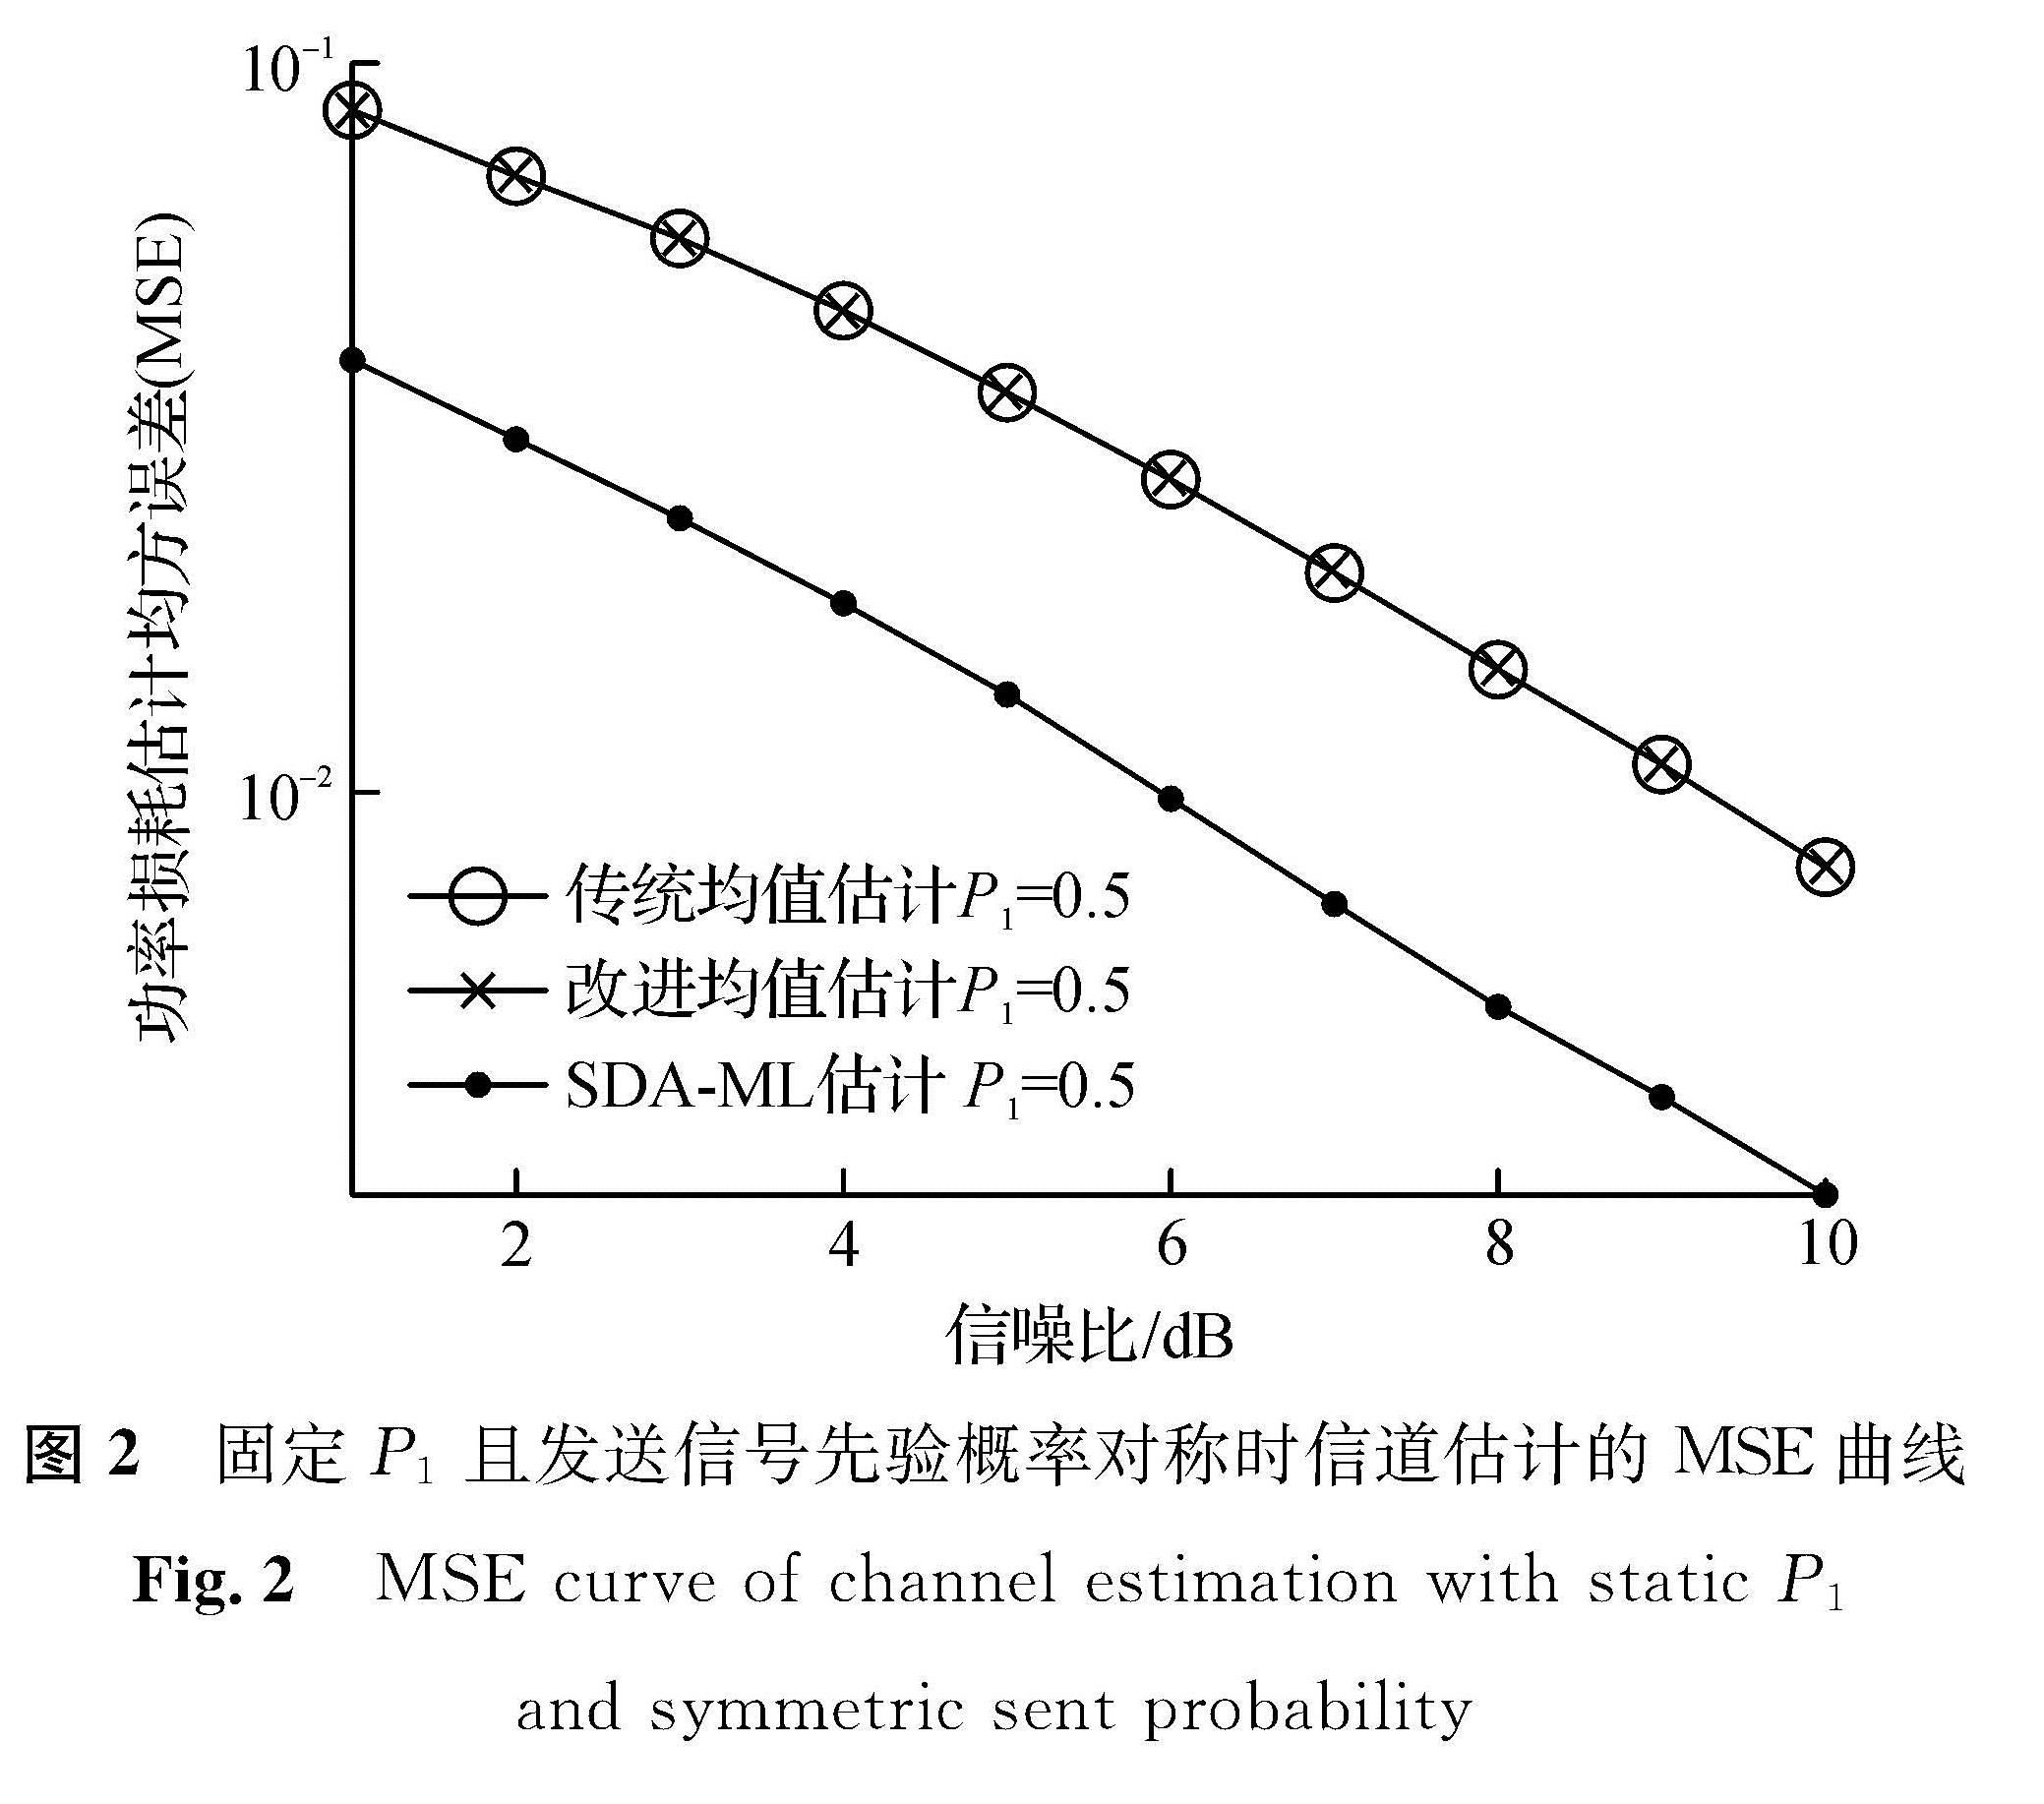 图2 固定P1且发送信号先验概率对称时信道估计的MSE曲线<br/>Fig.2 MSE curve of channel estimation with static P1 and symmetric sent probability